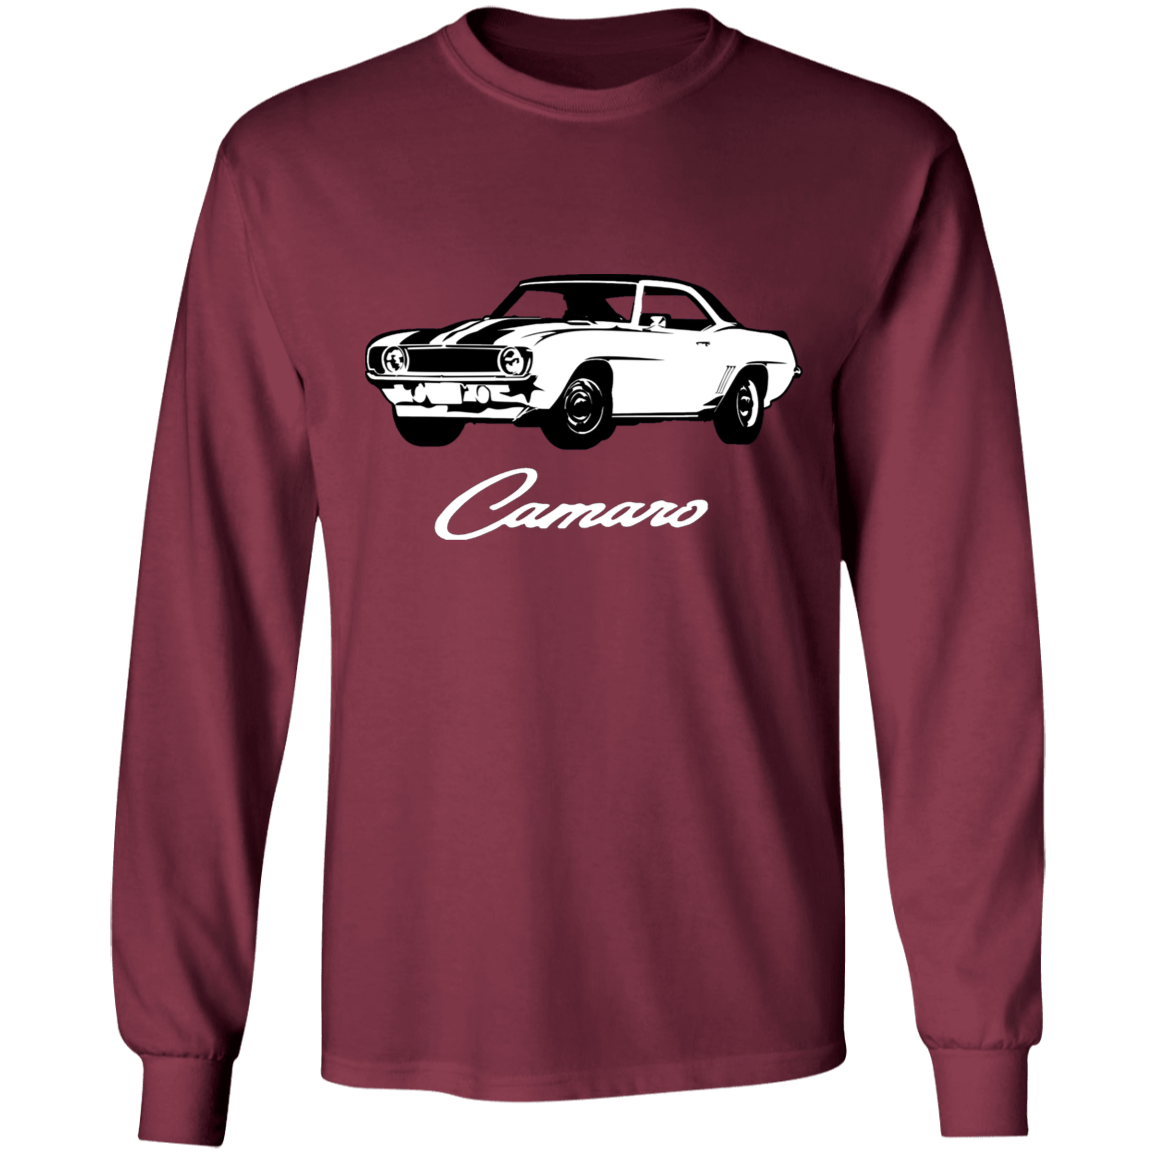 '69 Camero long sleeve t'shirt (w)